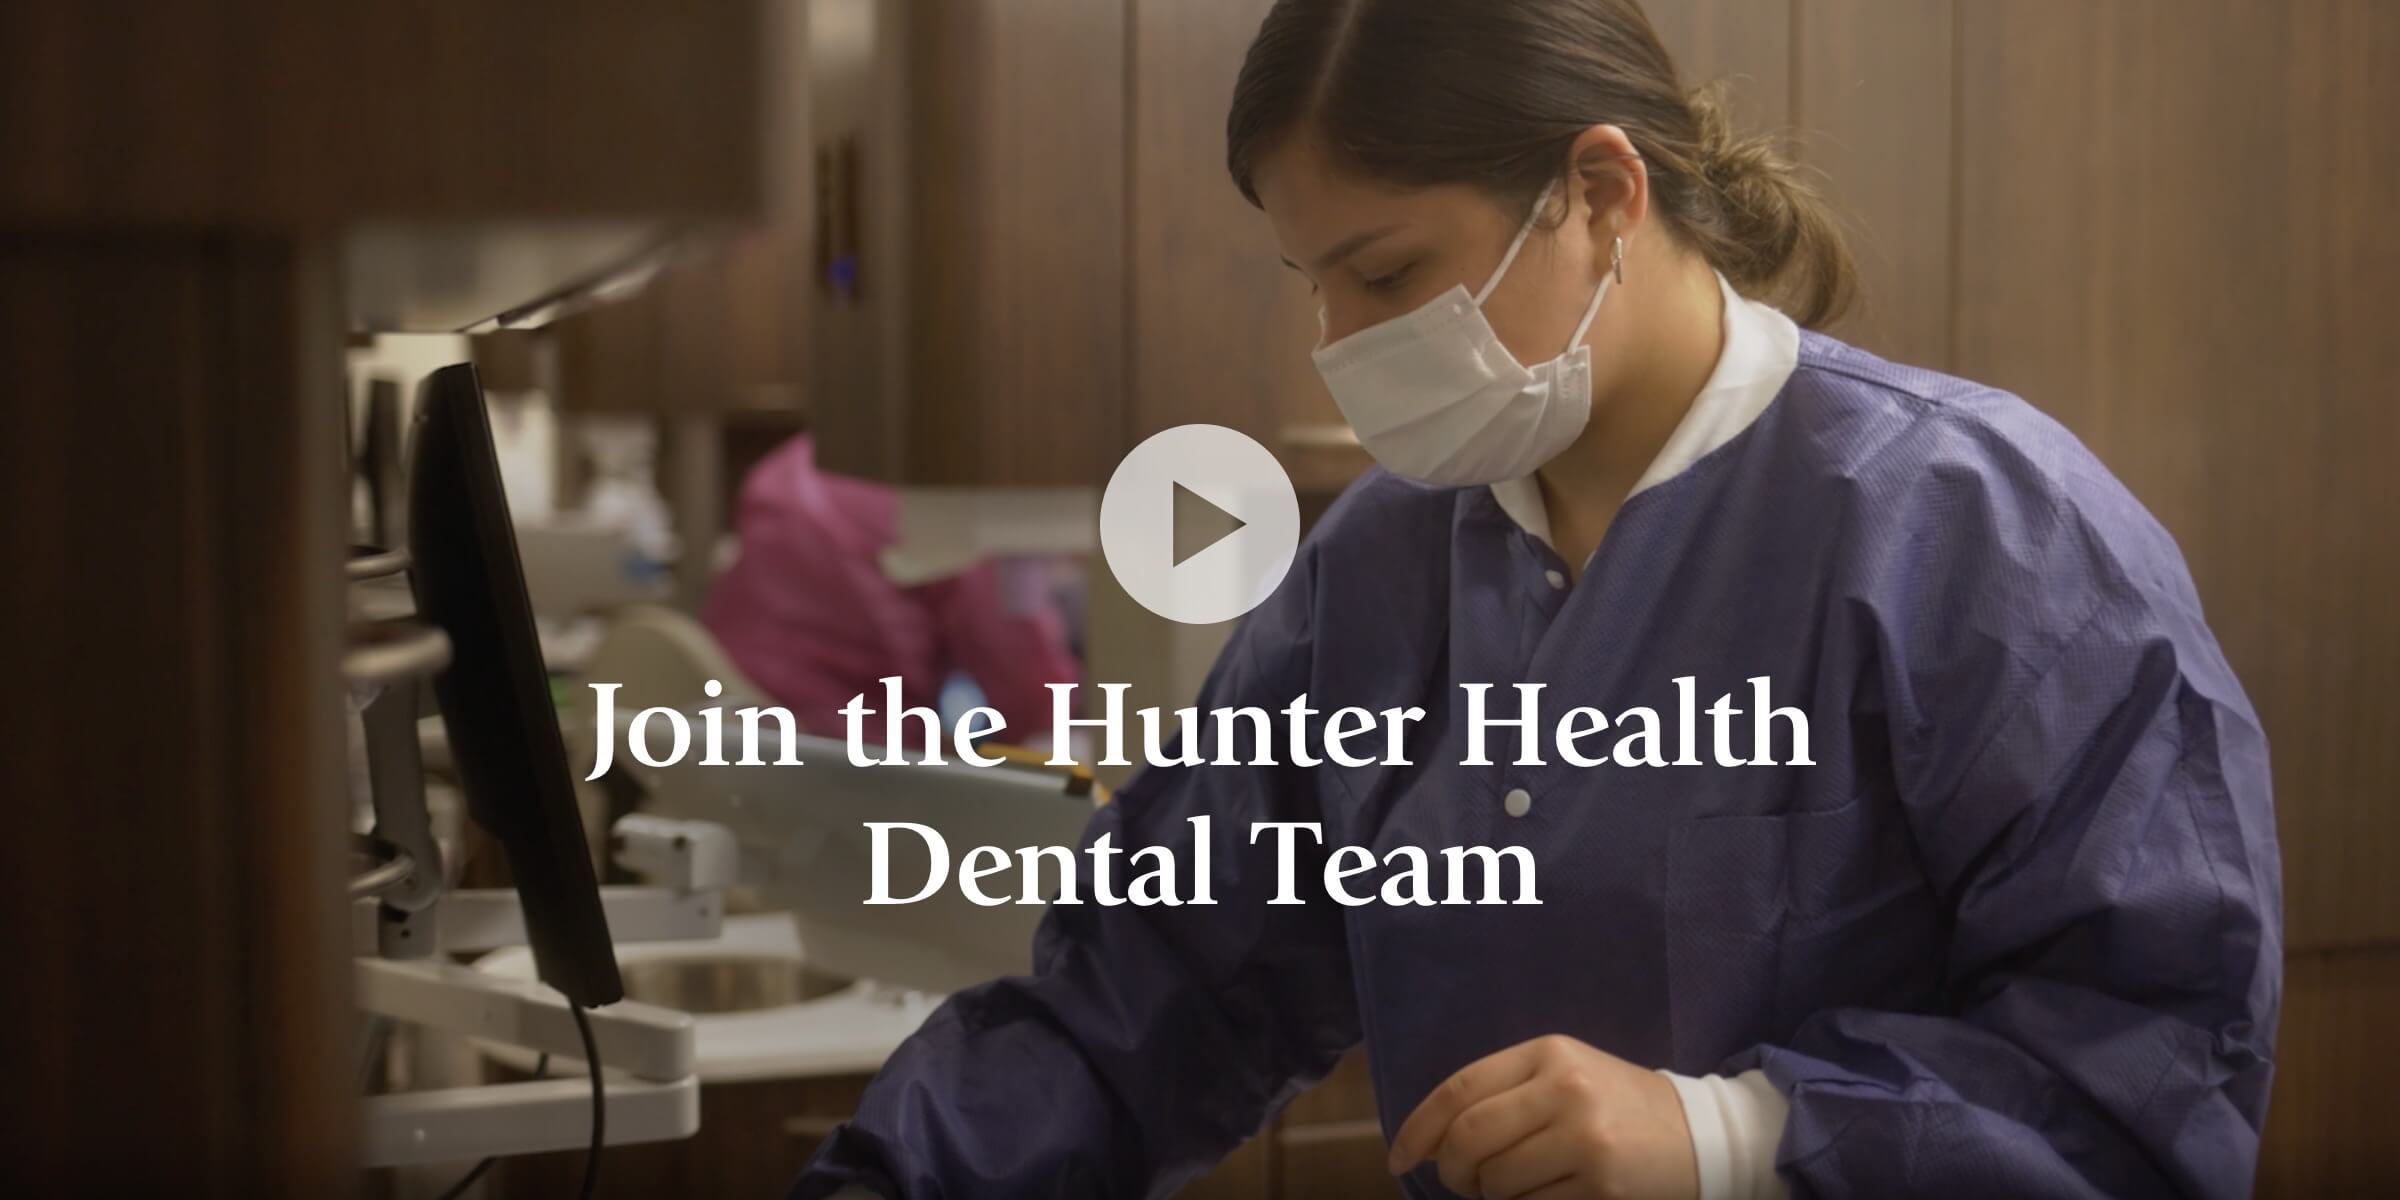 Dental Team Video